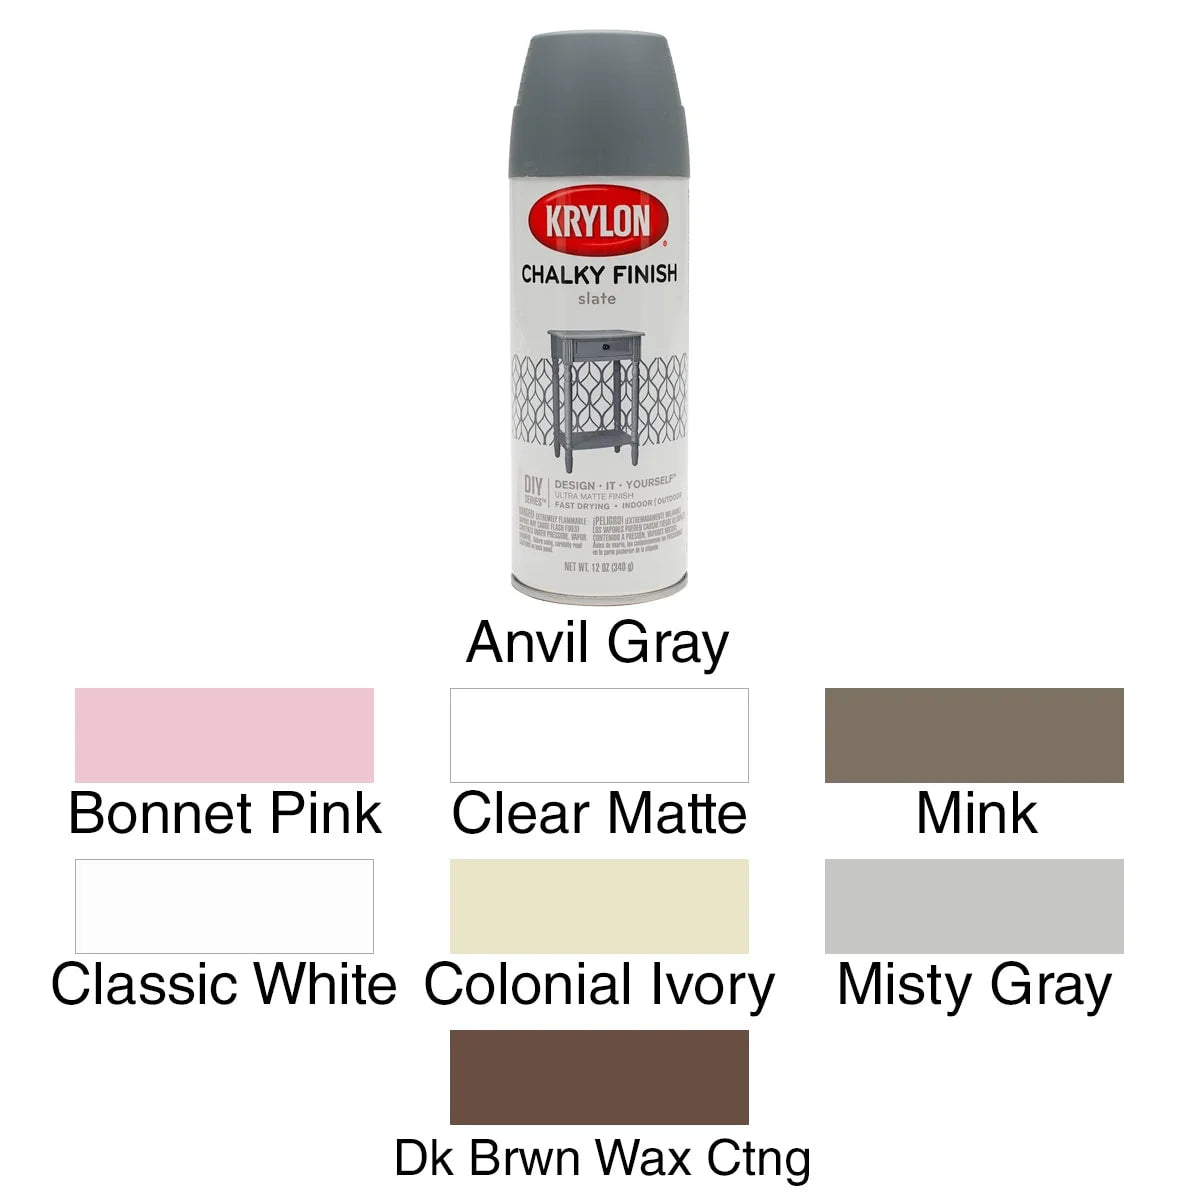 Chalky Finish Aerosol Spray Paint 12Oz-Colonial Ivory